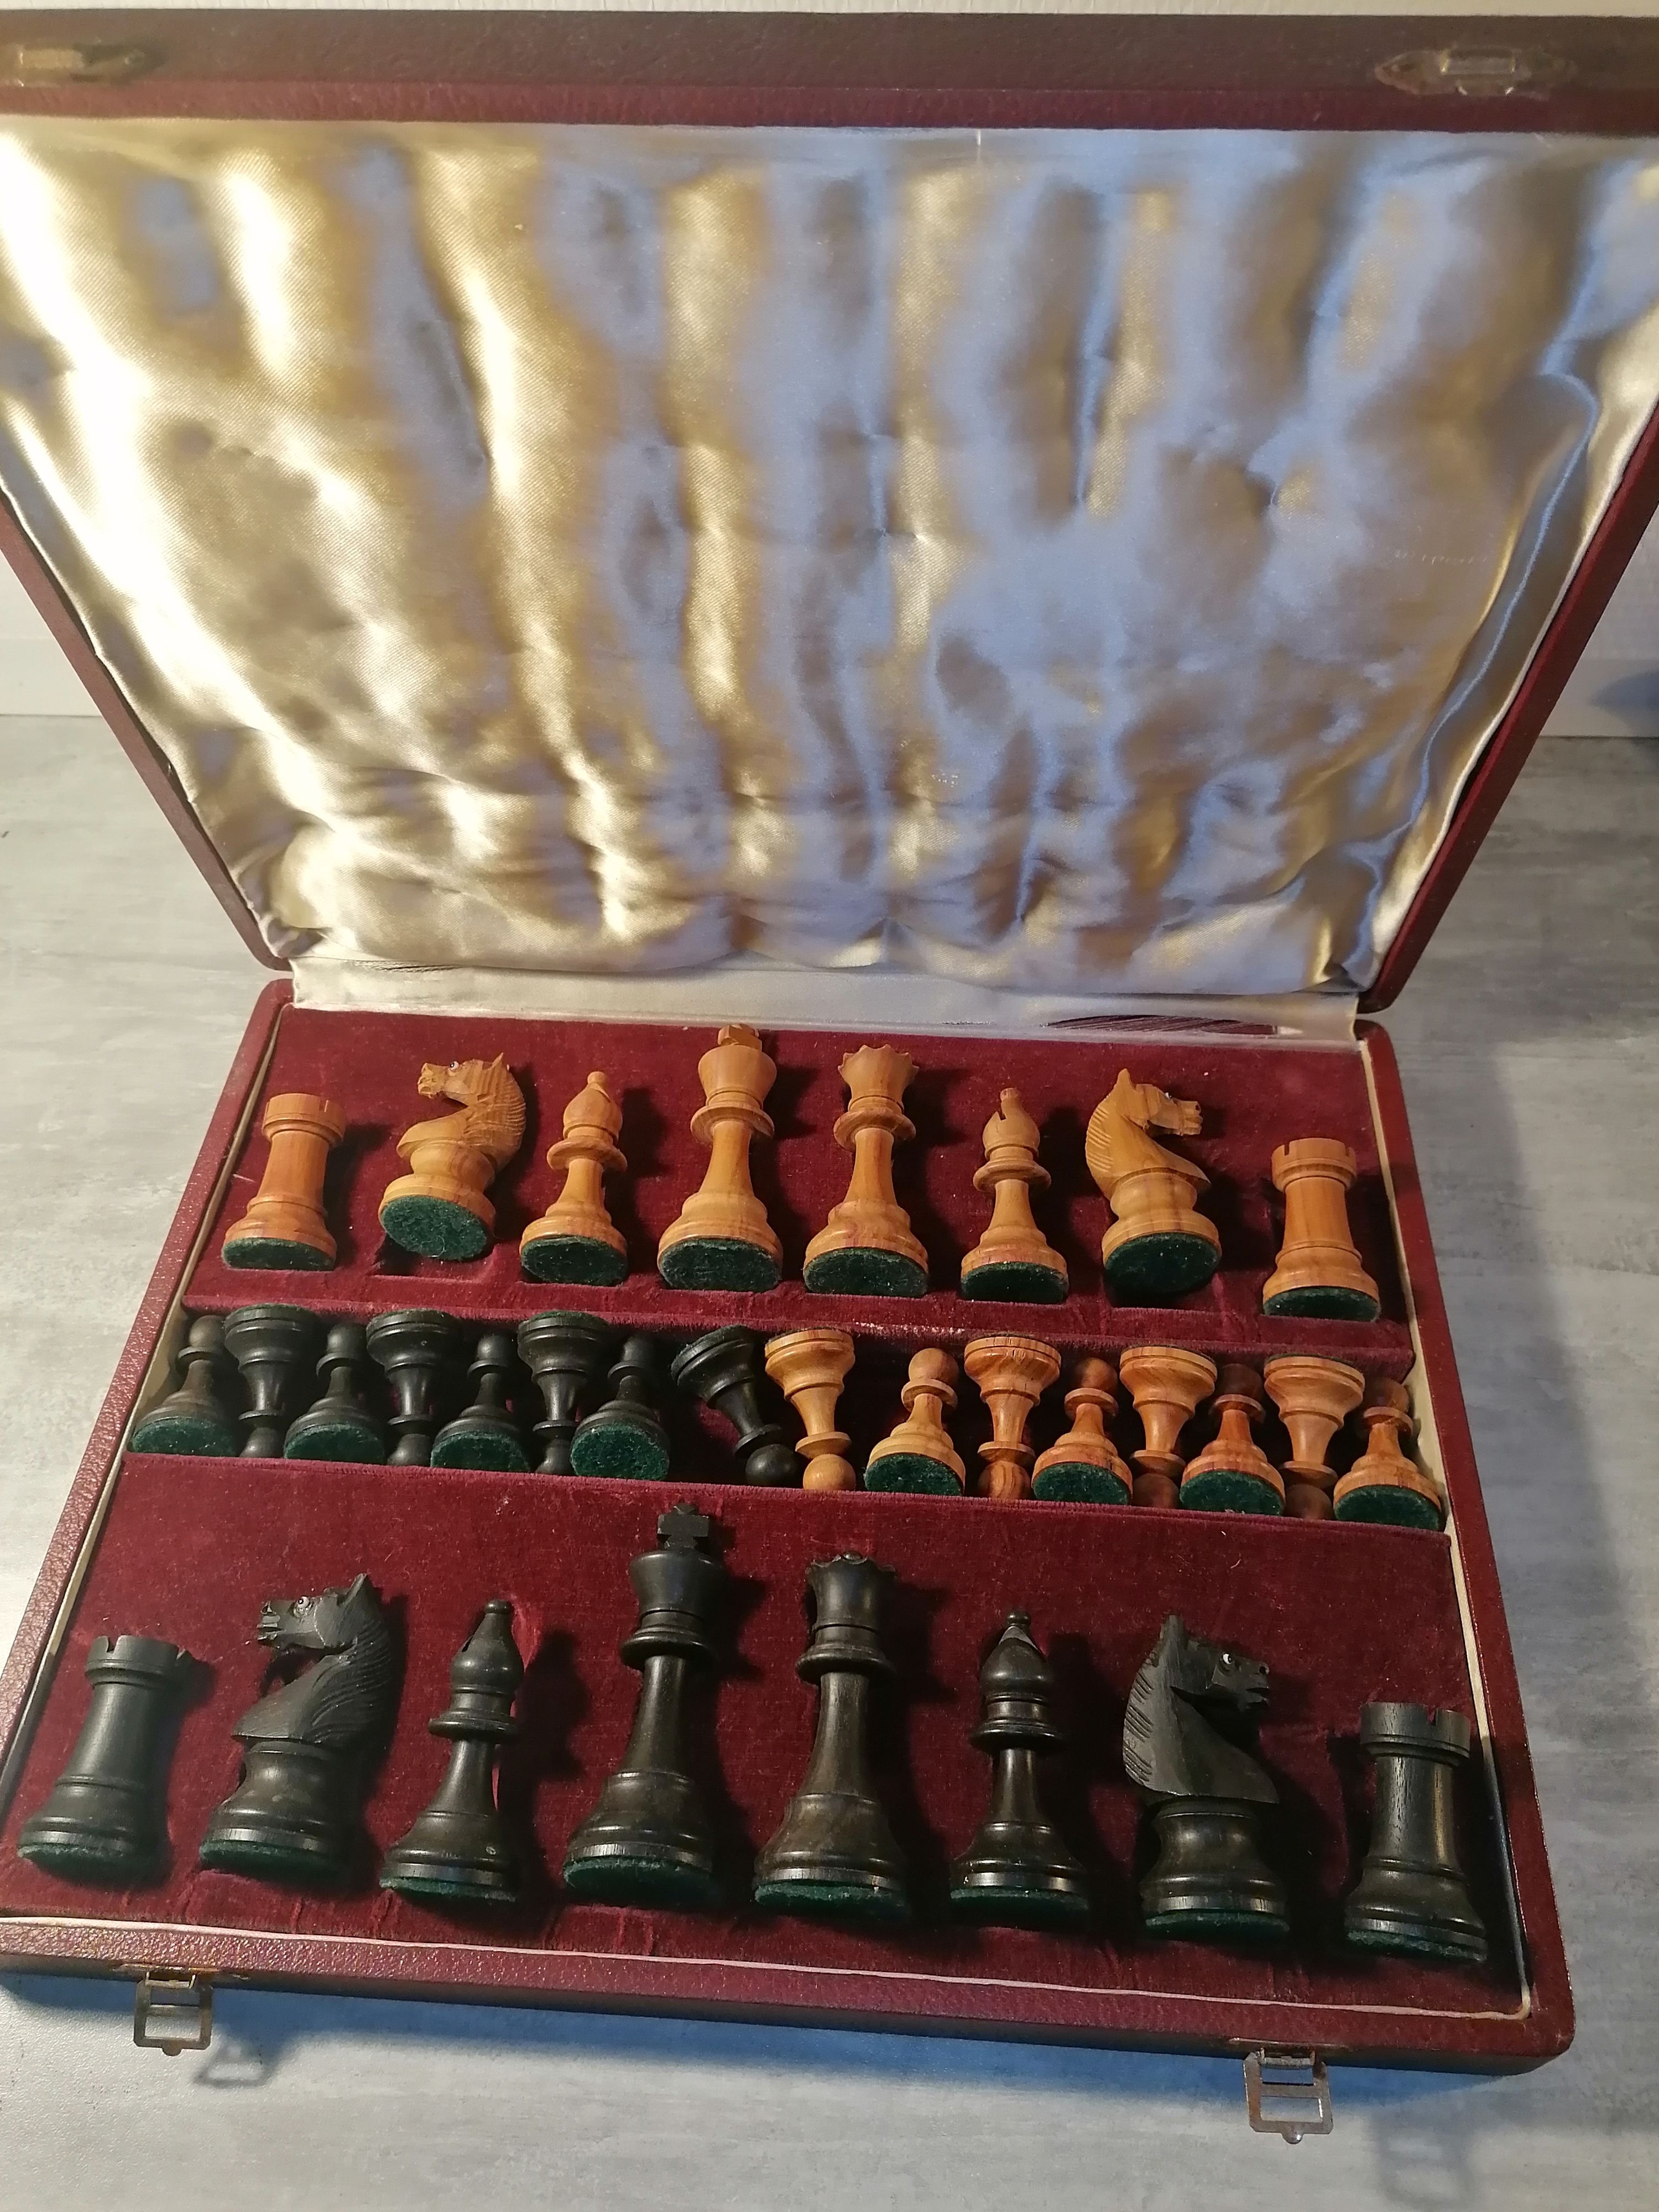 images.chesscomfiles.com/uploads/v1/images_users/t